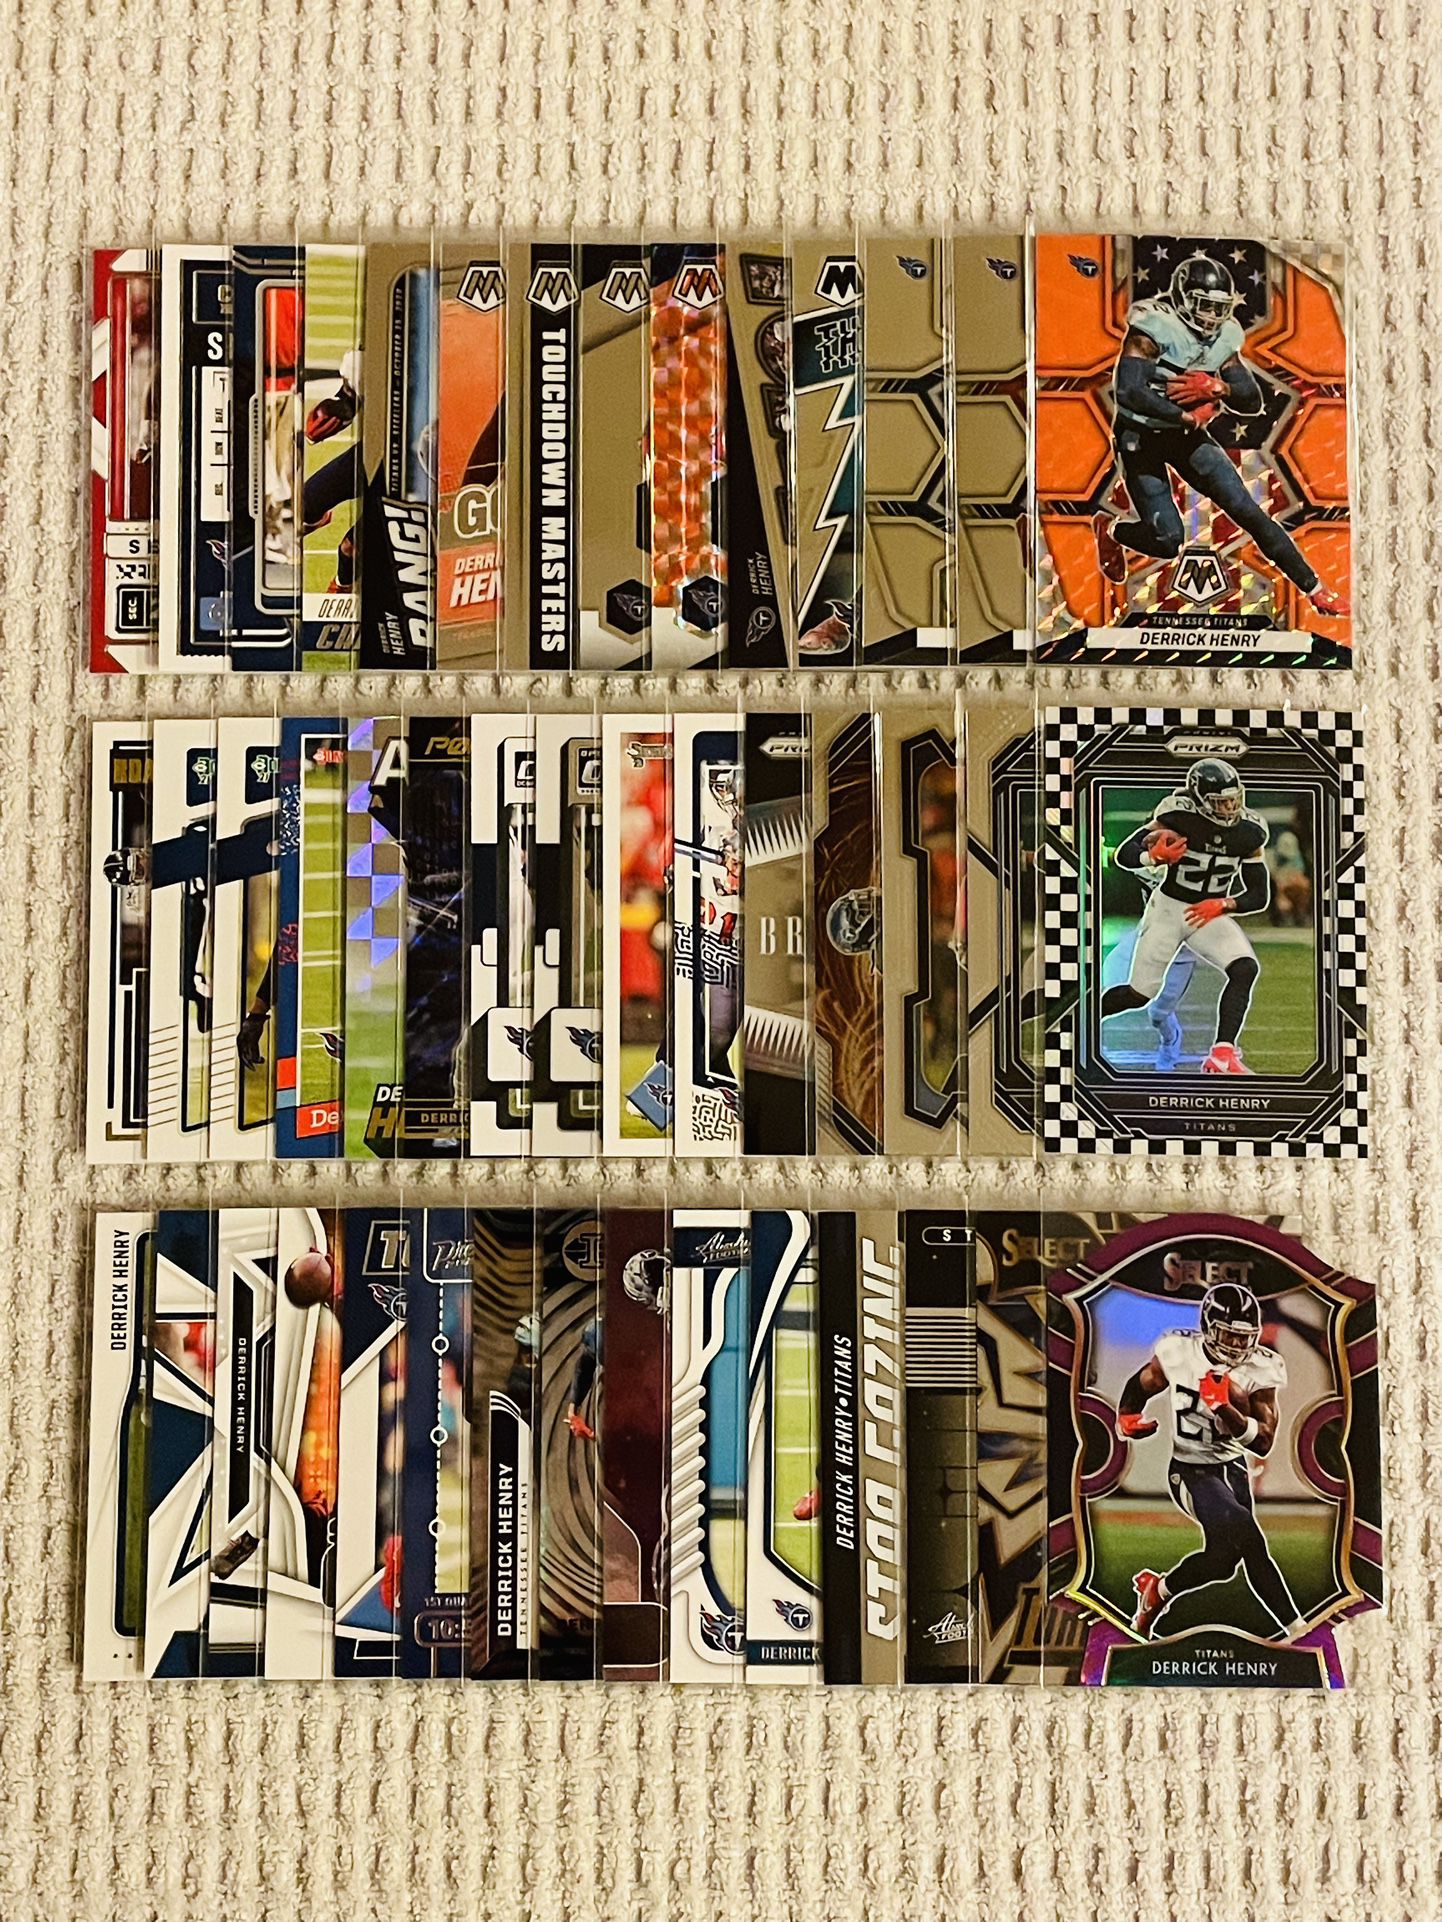 Derrick Henry 44 Card Football Lot! Prizms, Parallels, Inserts, Short Prints, Variations & More!